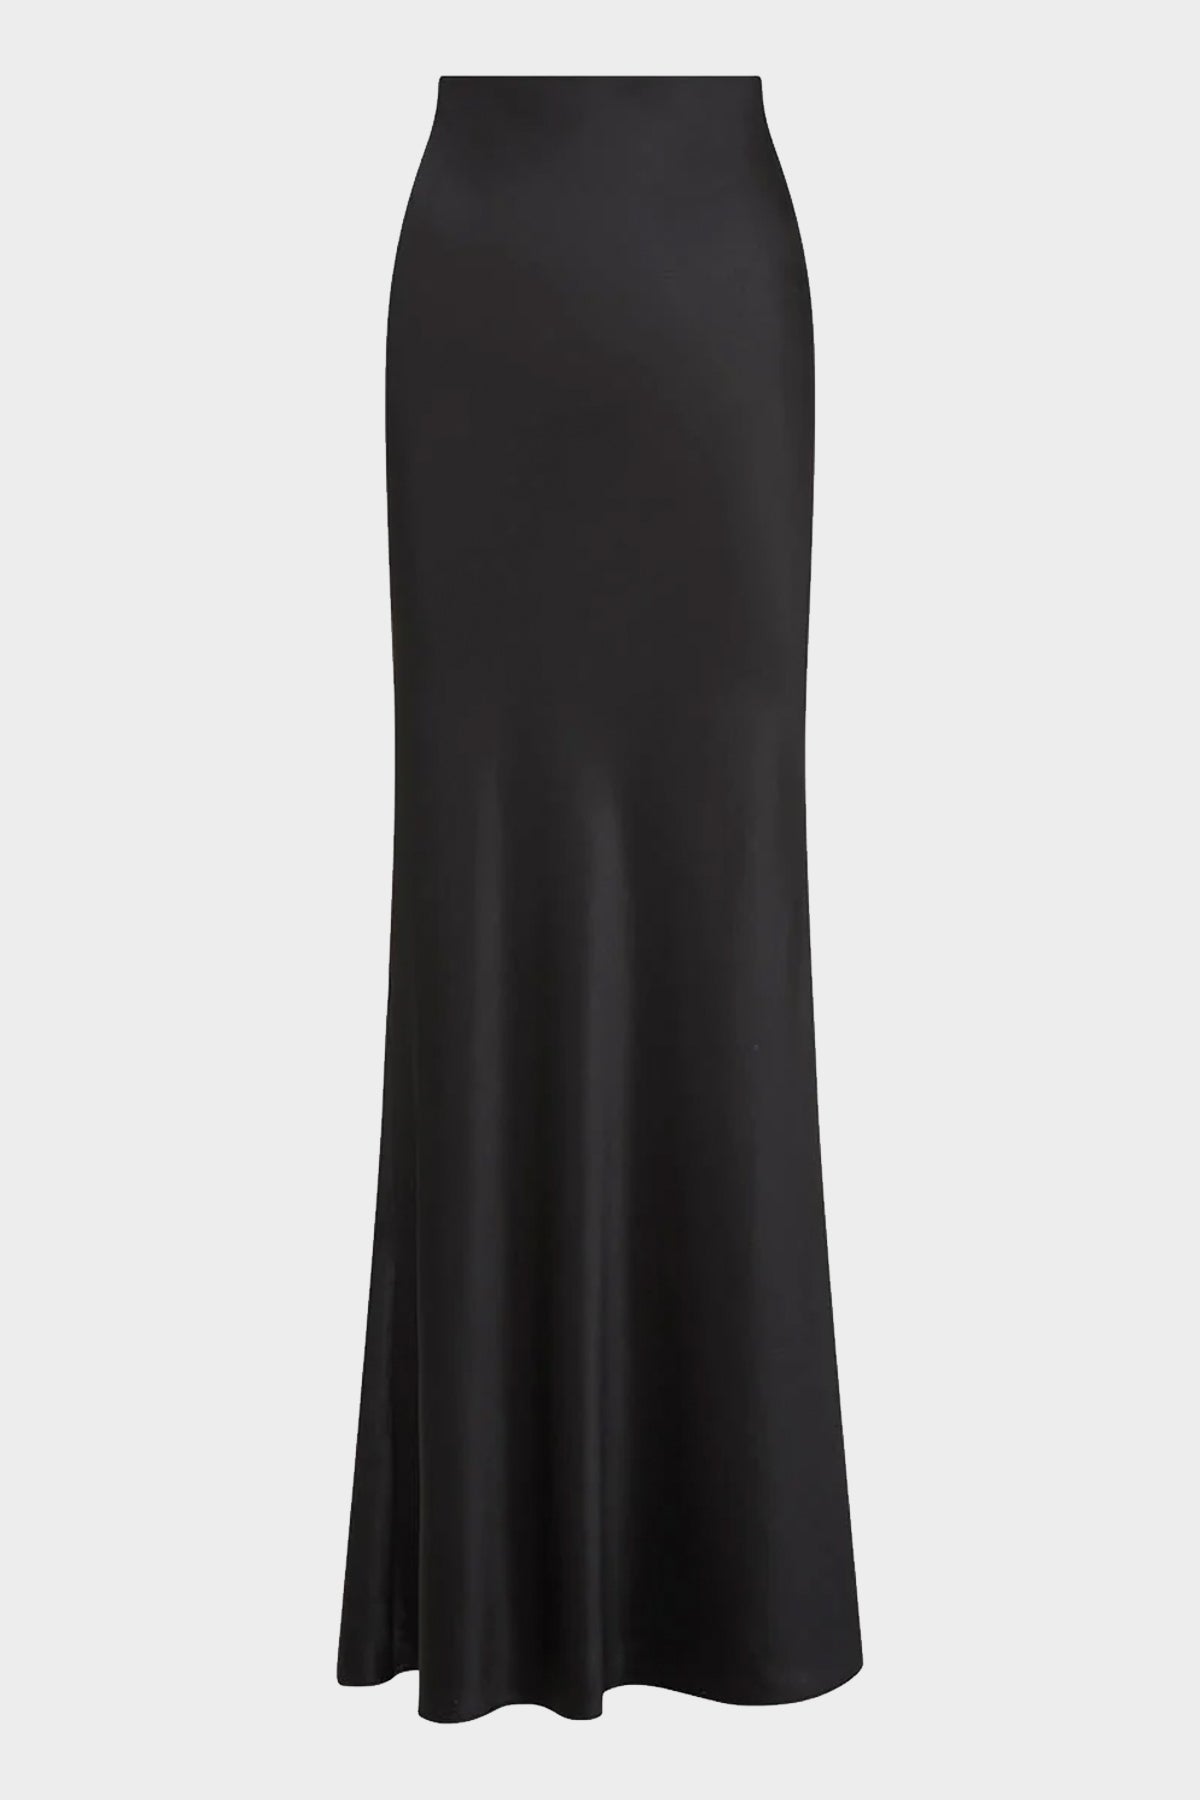 Medina Stretch Silk Charmeuse Skirt in Black - shop-olivia.com